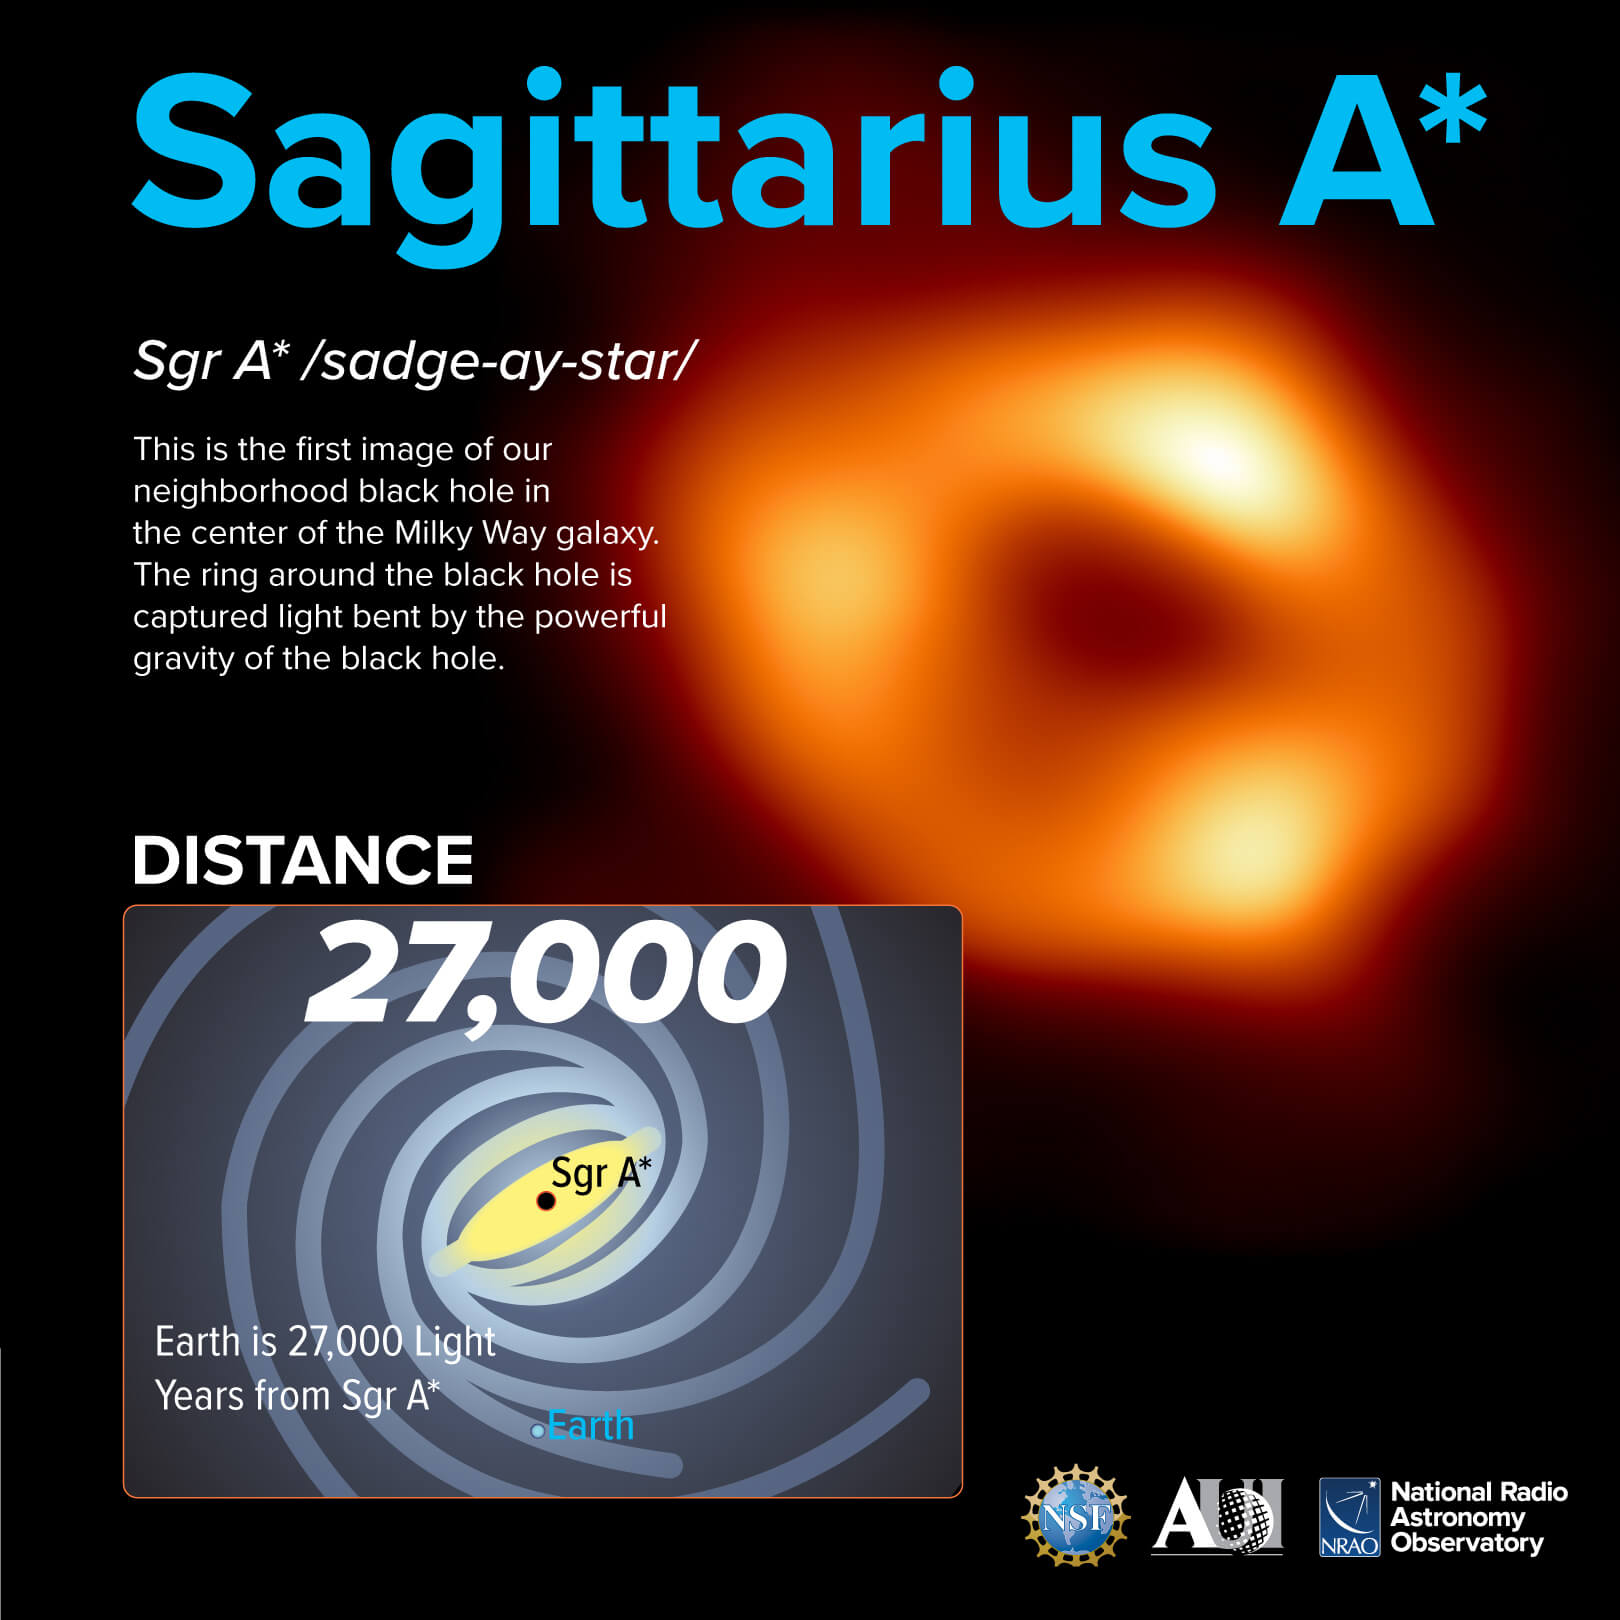 Sagittarius A*, National Radio Astronomy Observatory | NRAO on Twitter